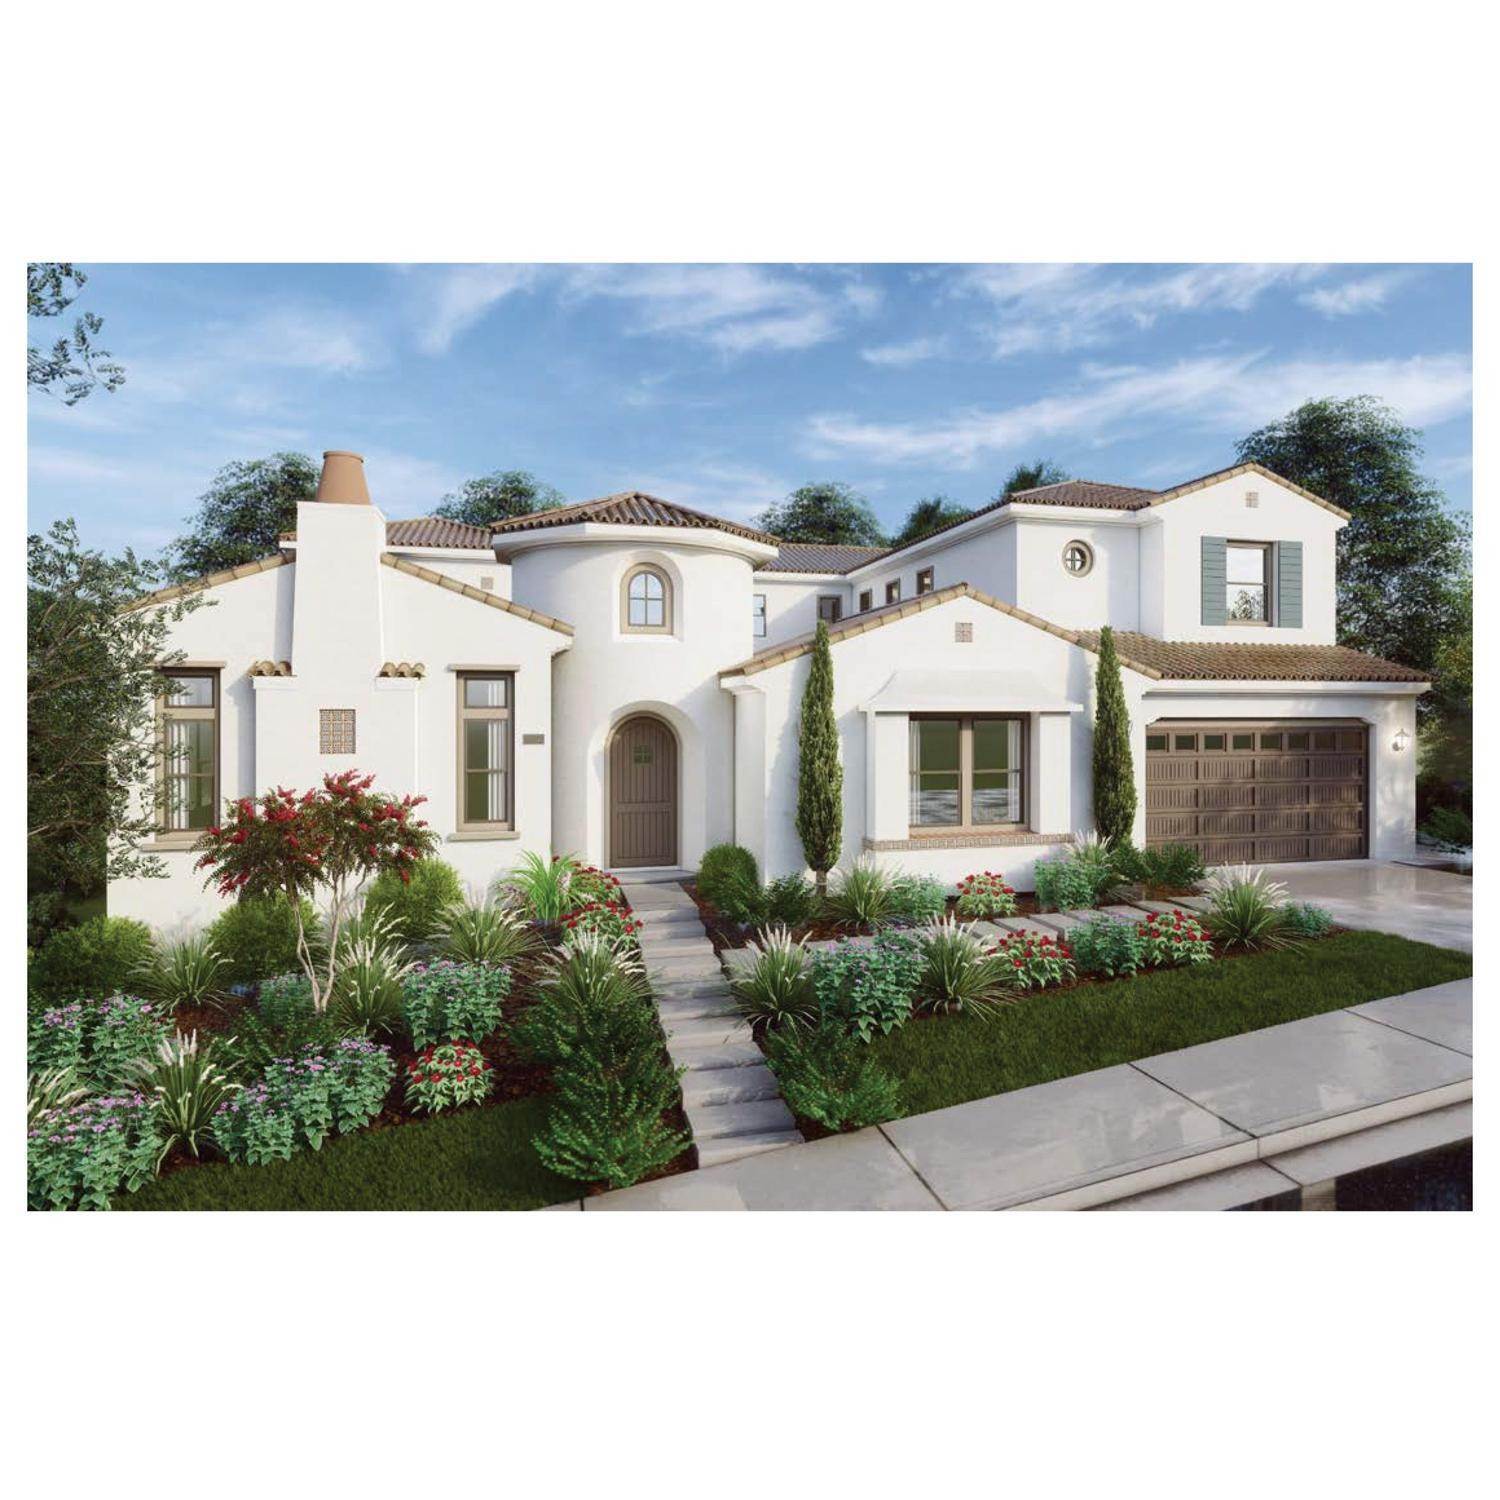 Single Family for Sale at Fountaingrove - Plan 39 565 W College Ave SANTA ROSA, CALIFORNIA 95401 UNITED STATES